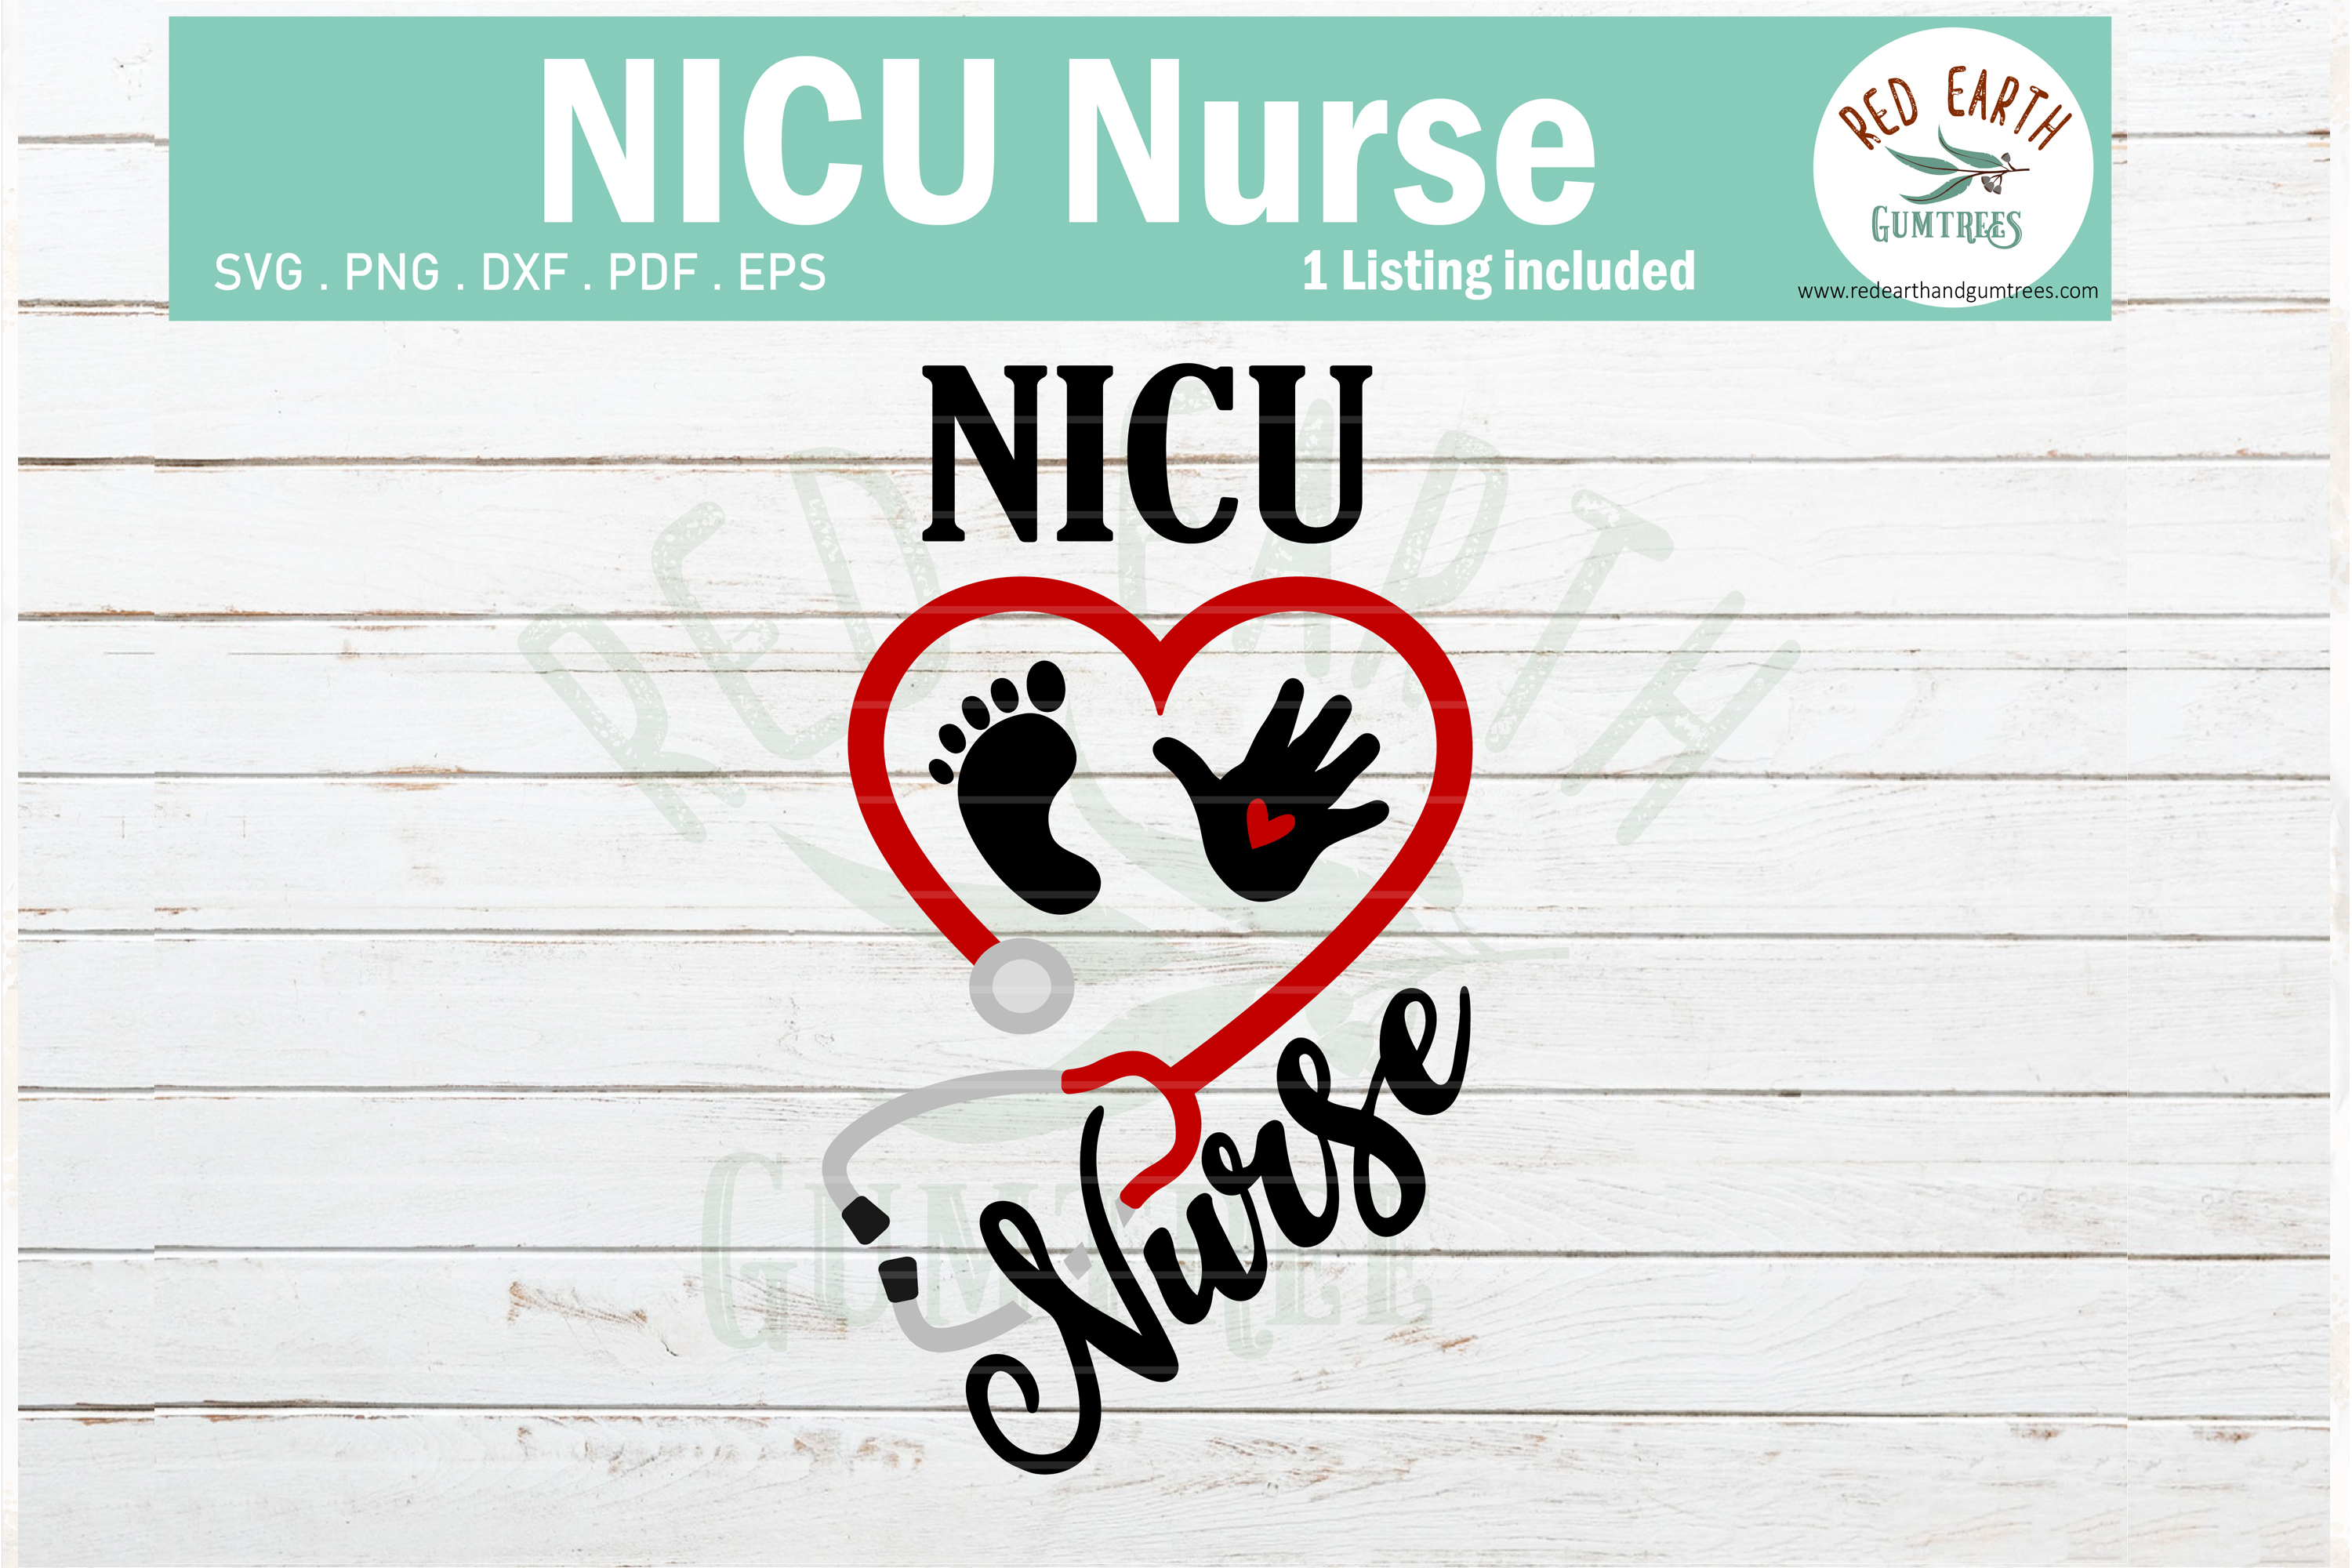 Nicu nurse heart stethoscope svg, baby hand feet SVG,PNG,DXF